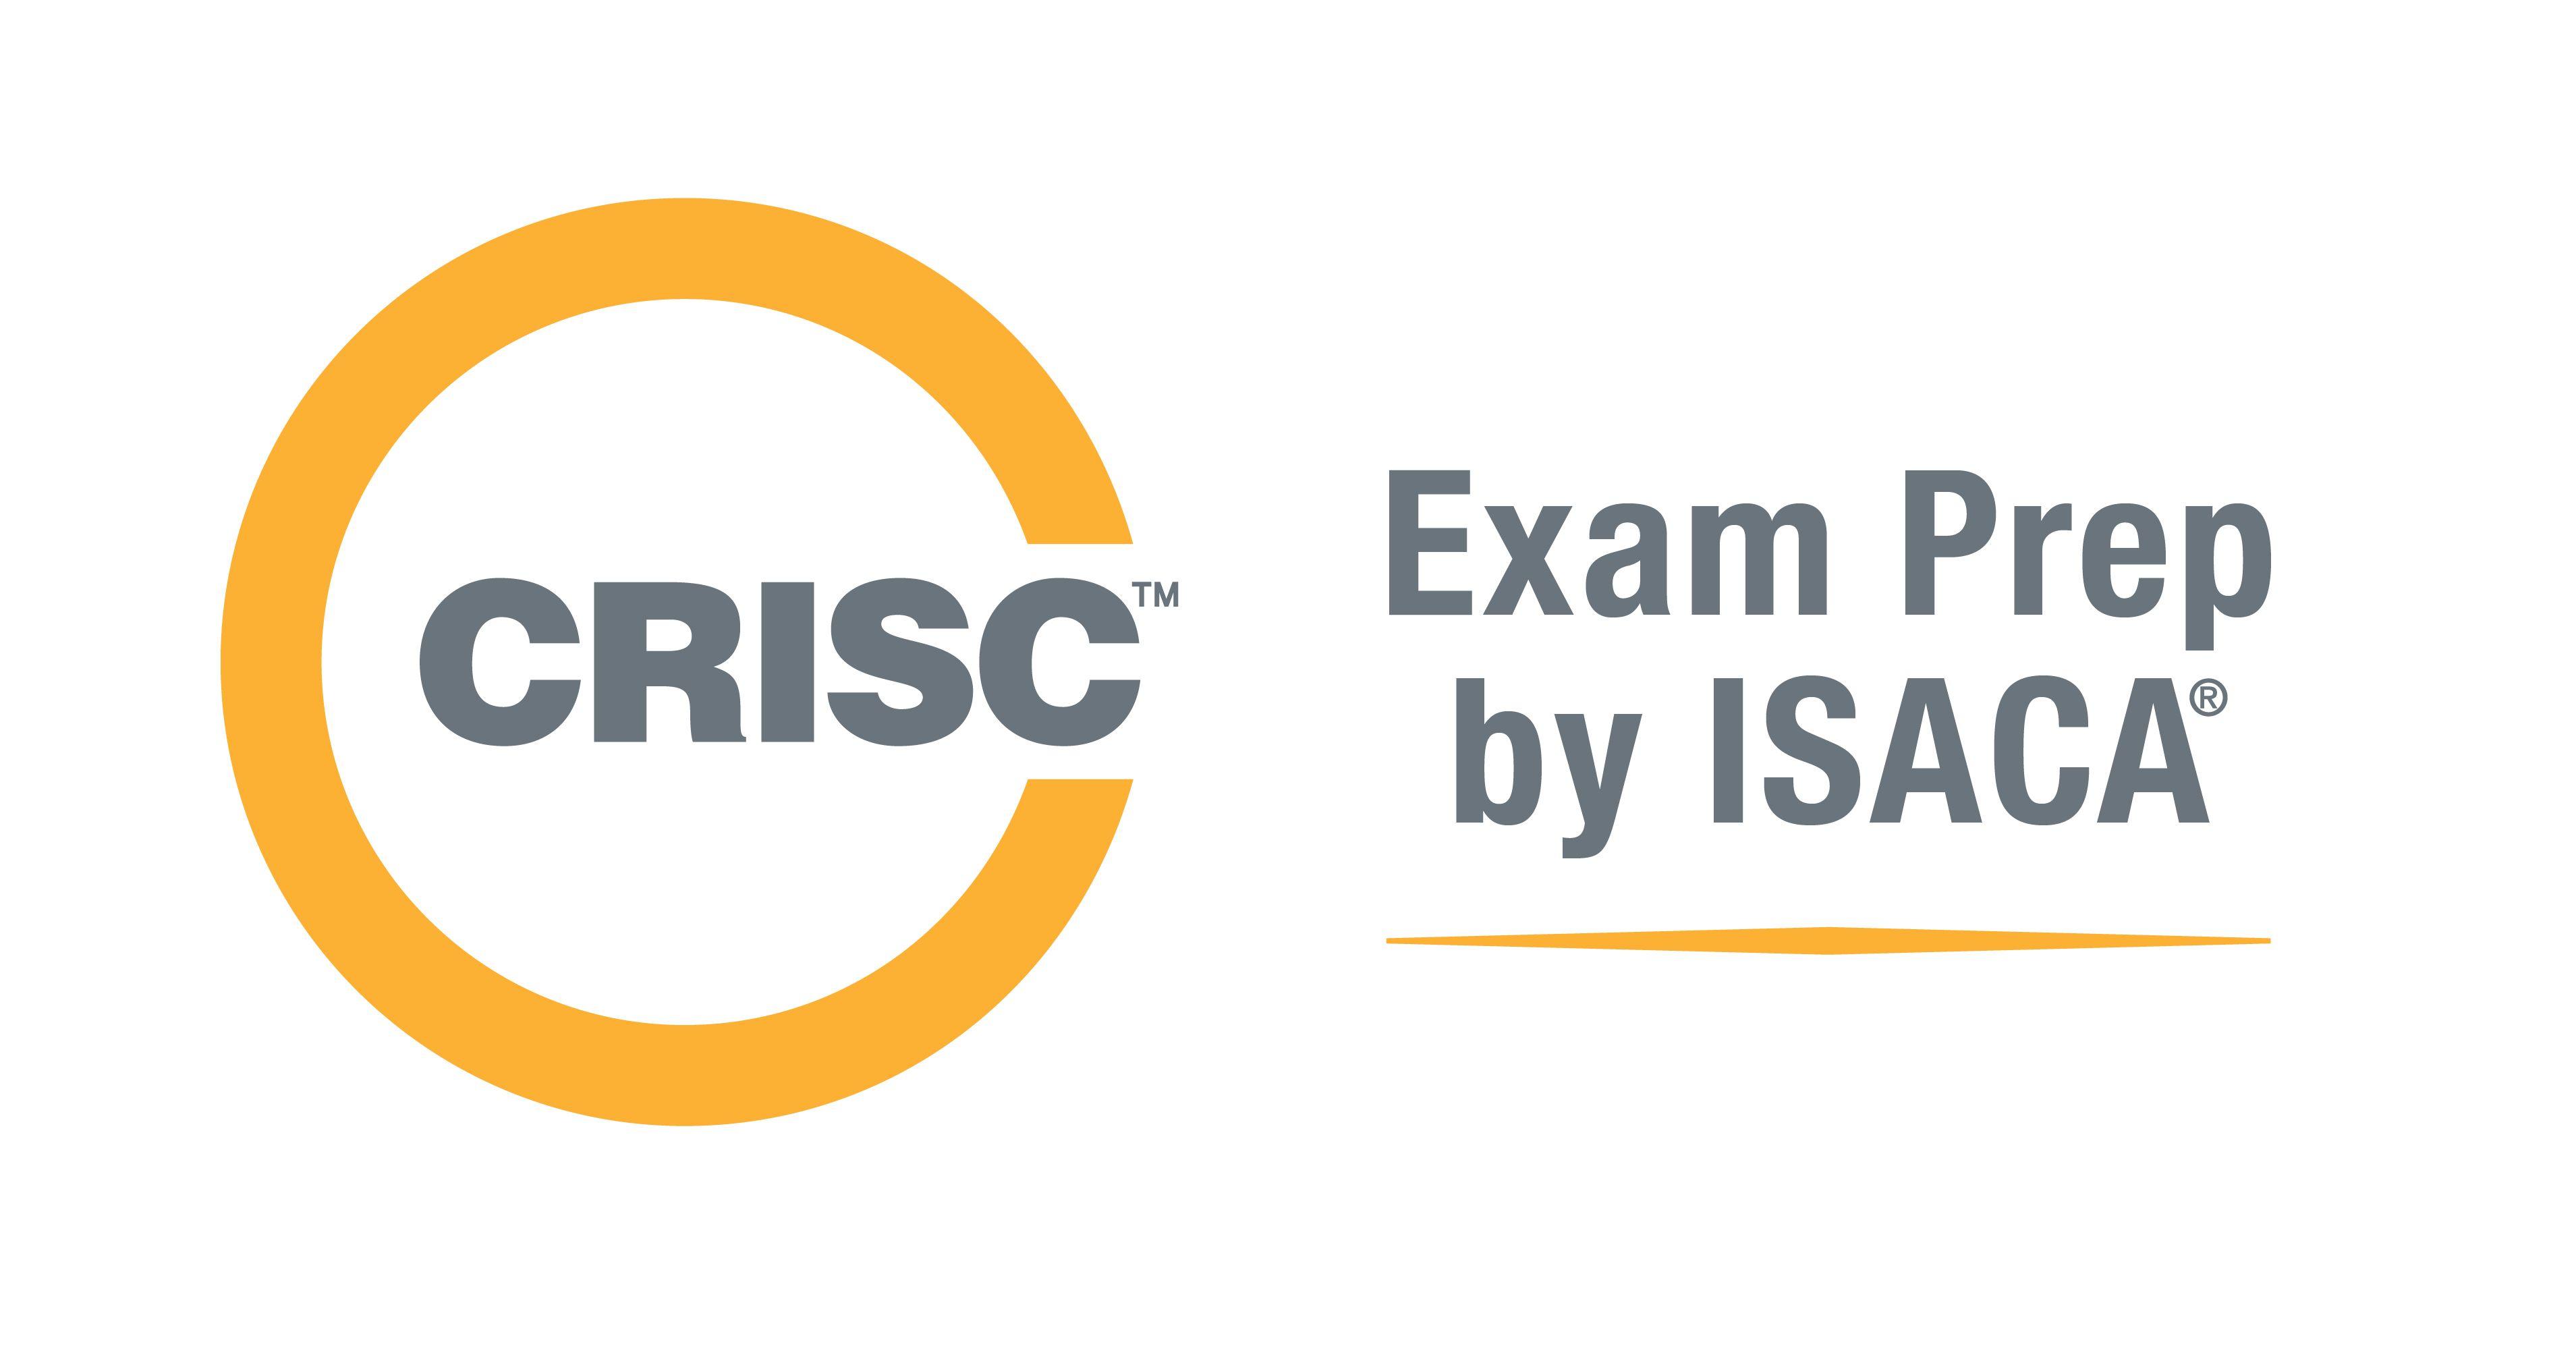 CRISC Logo - CRISC Exam Prep - Engage